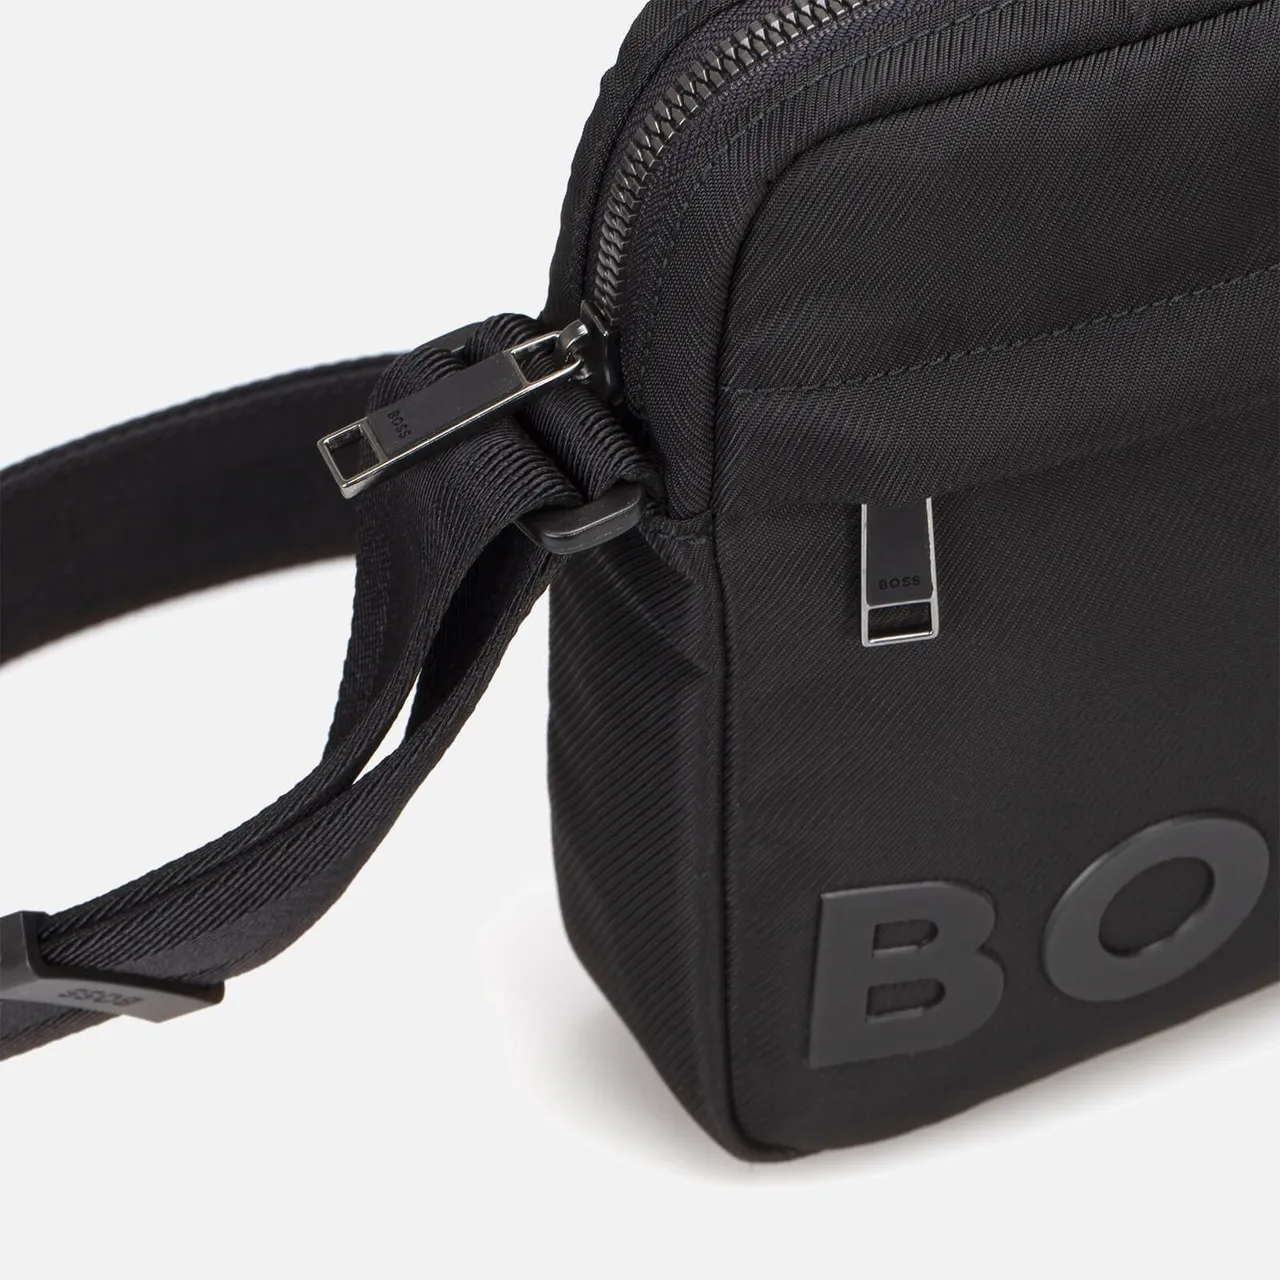 BOSS Catch 2.0 DS Logo Cross Body Bag